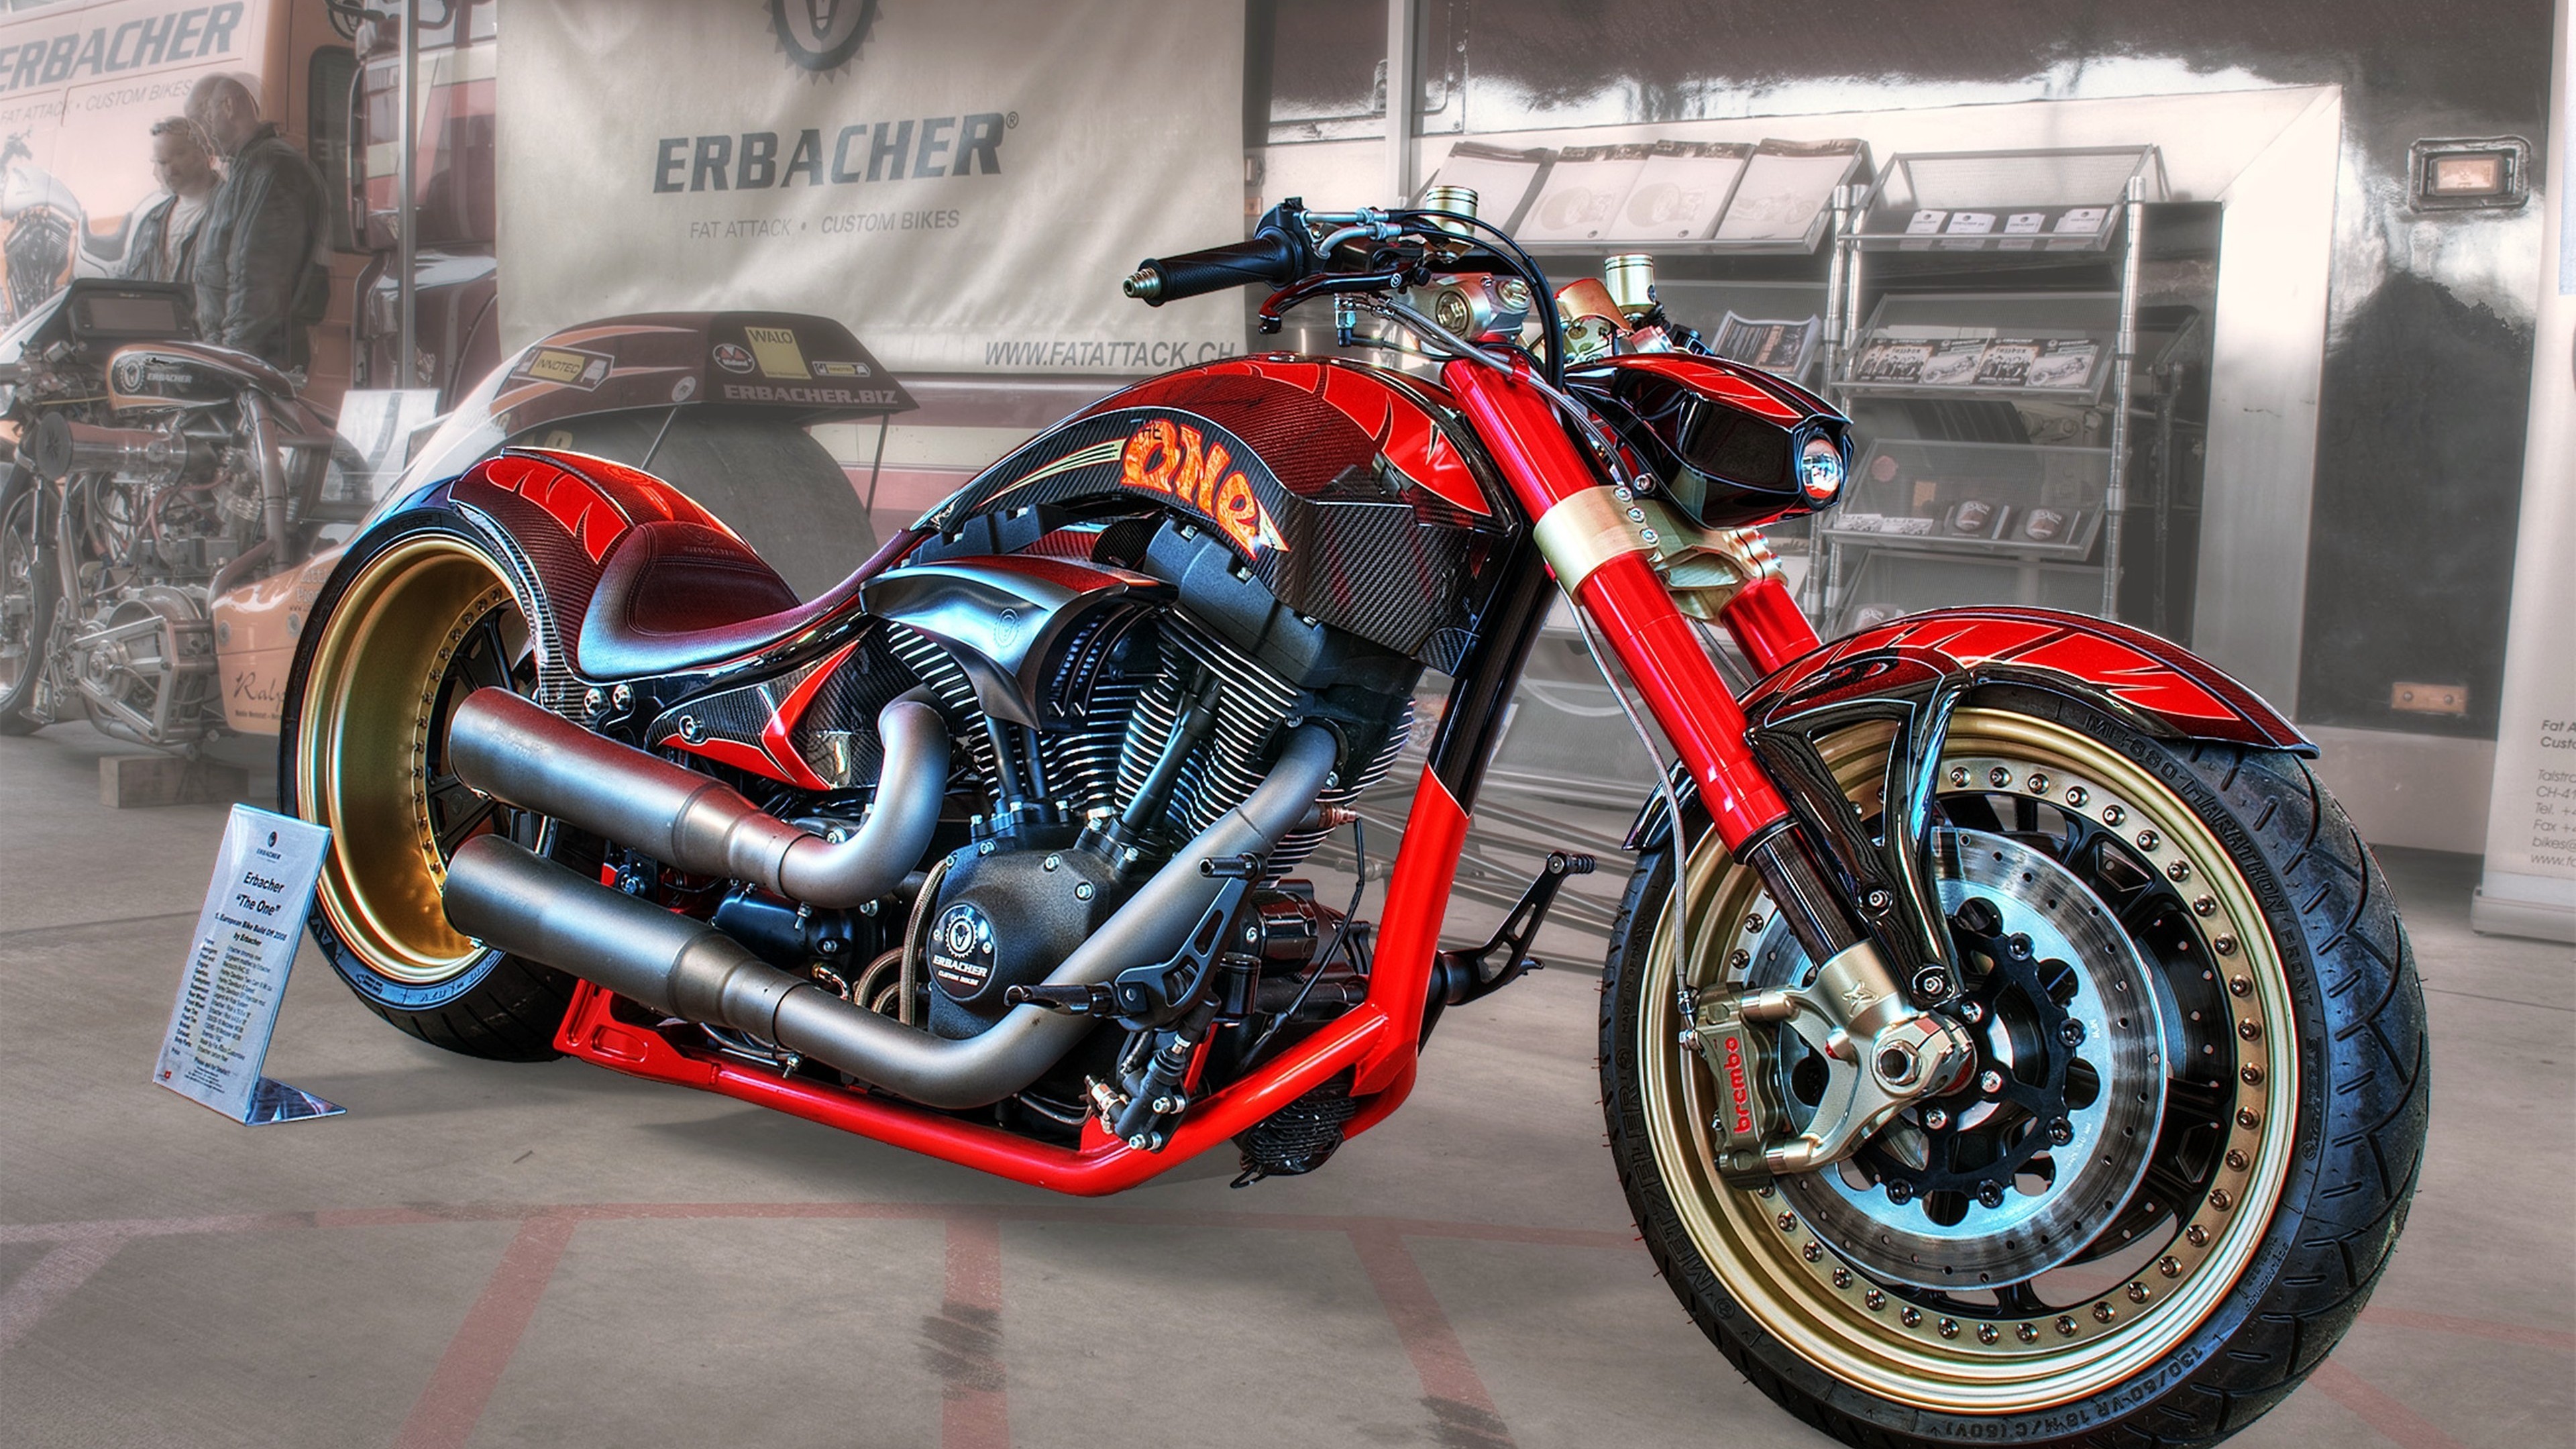 3840x2160 Erbacher The One Motorcycle Harley Davidson Bike Wallpaper